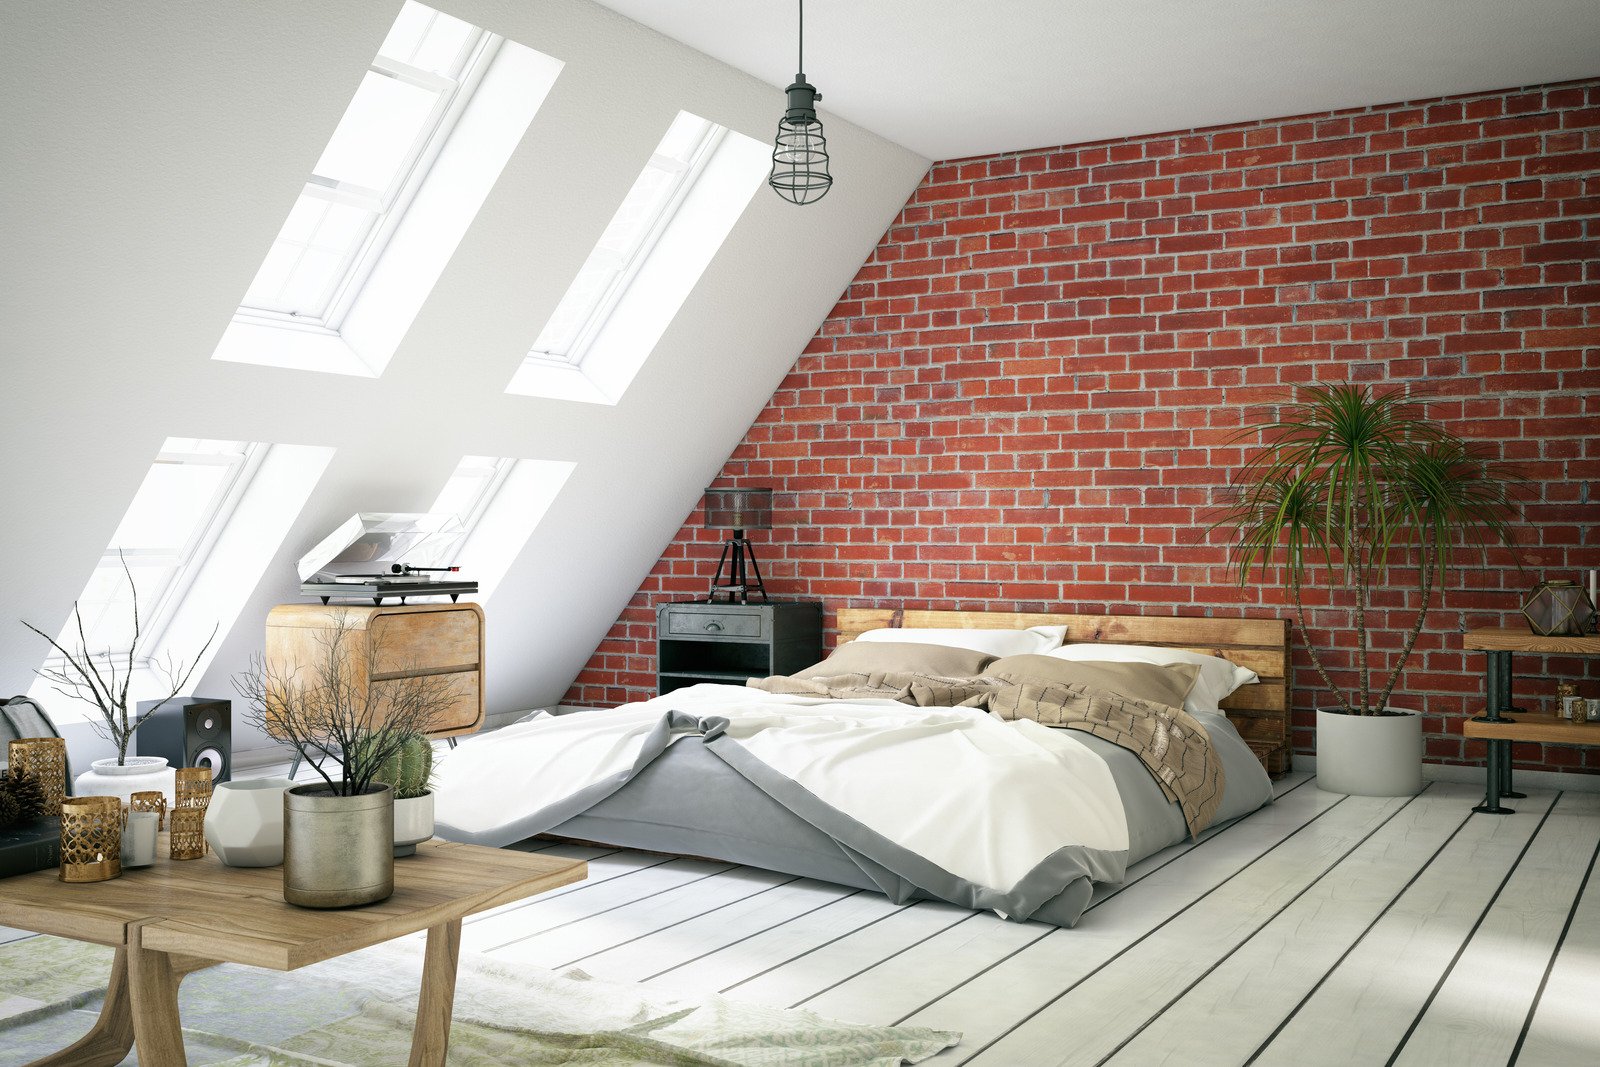 kanapa, łóżko i ceglana ściana